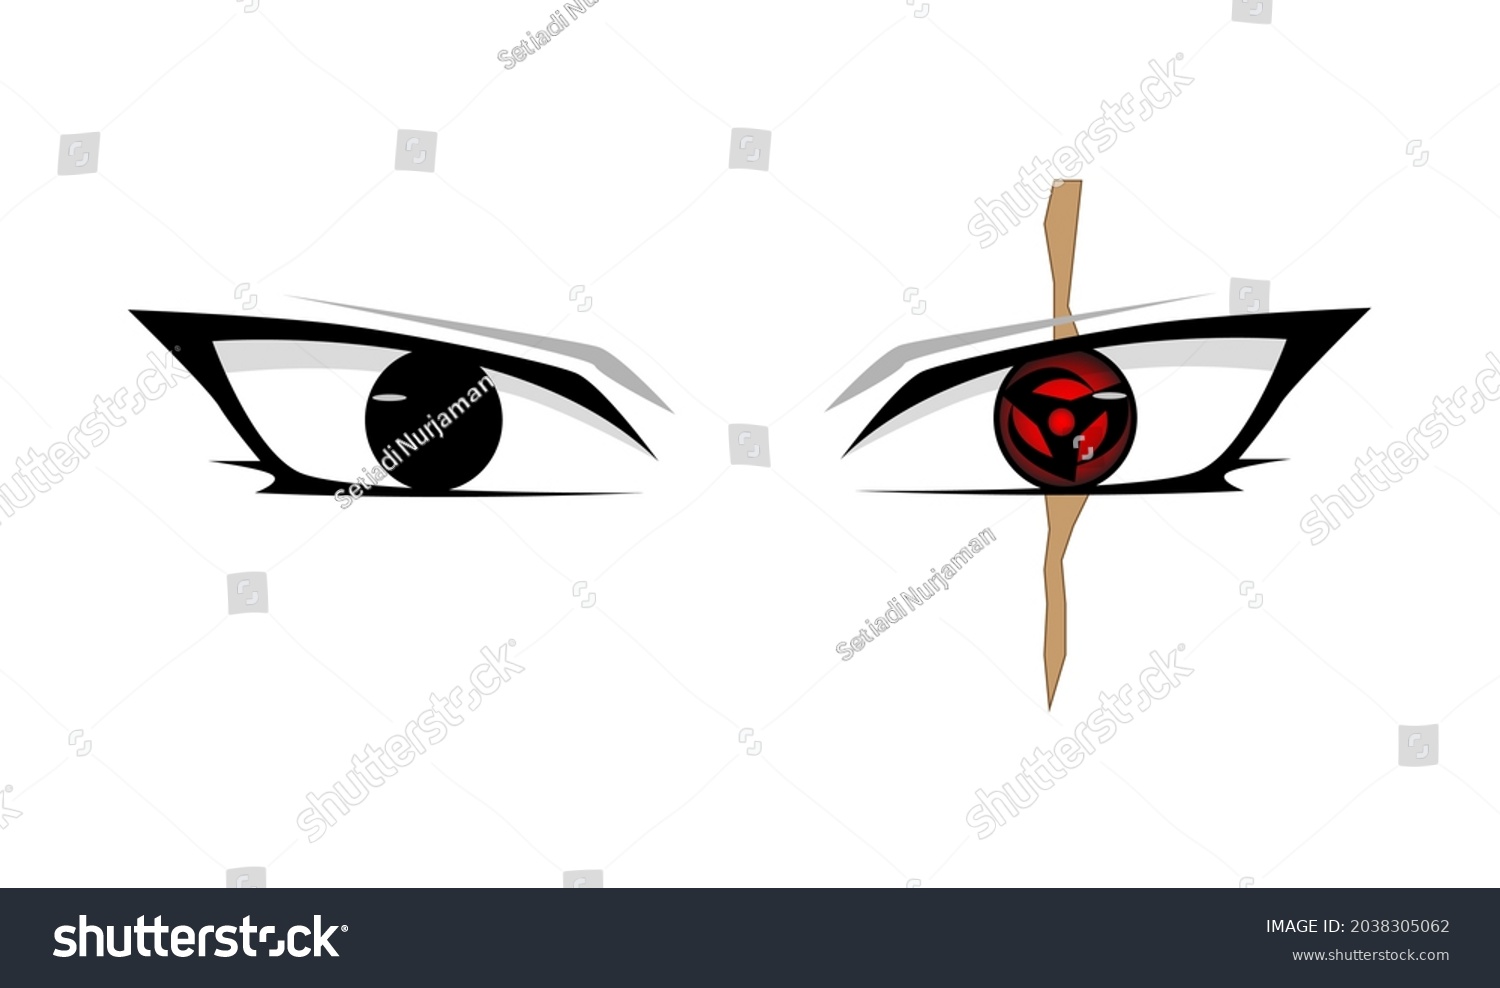 SVG of illustration vector graphic of Kakashi Hatake's Sharingan Eyes svg